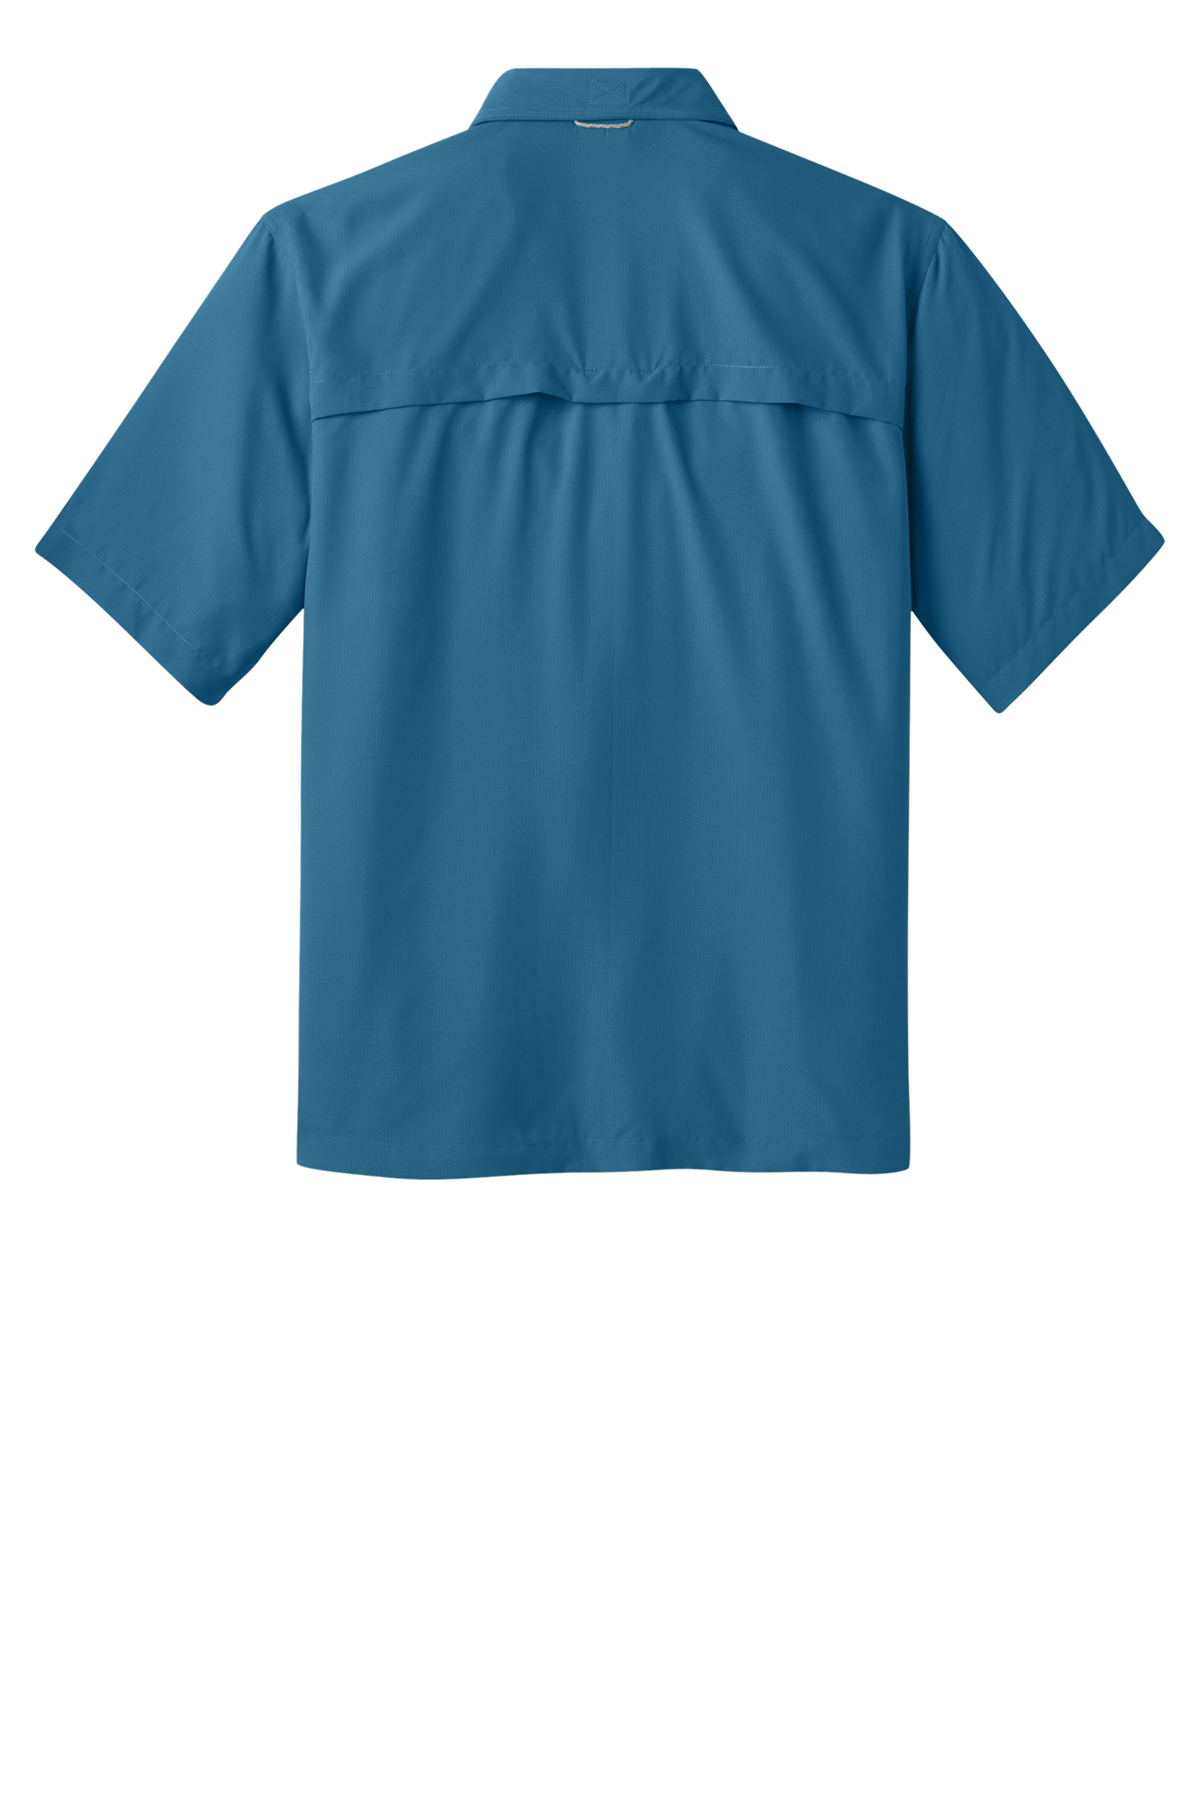 Eddie Bauer - Short Sleeve Performance Fishing Shirt | Product | SanMar